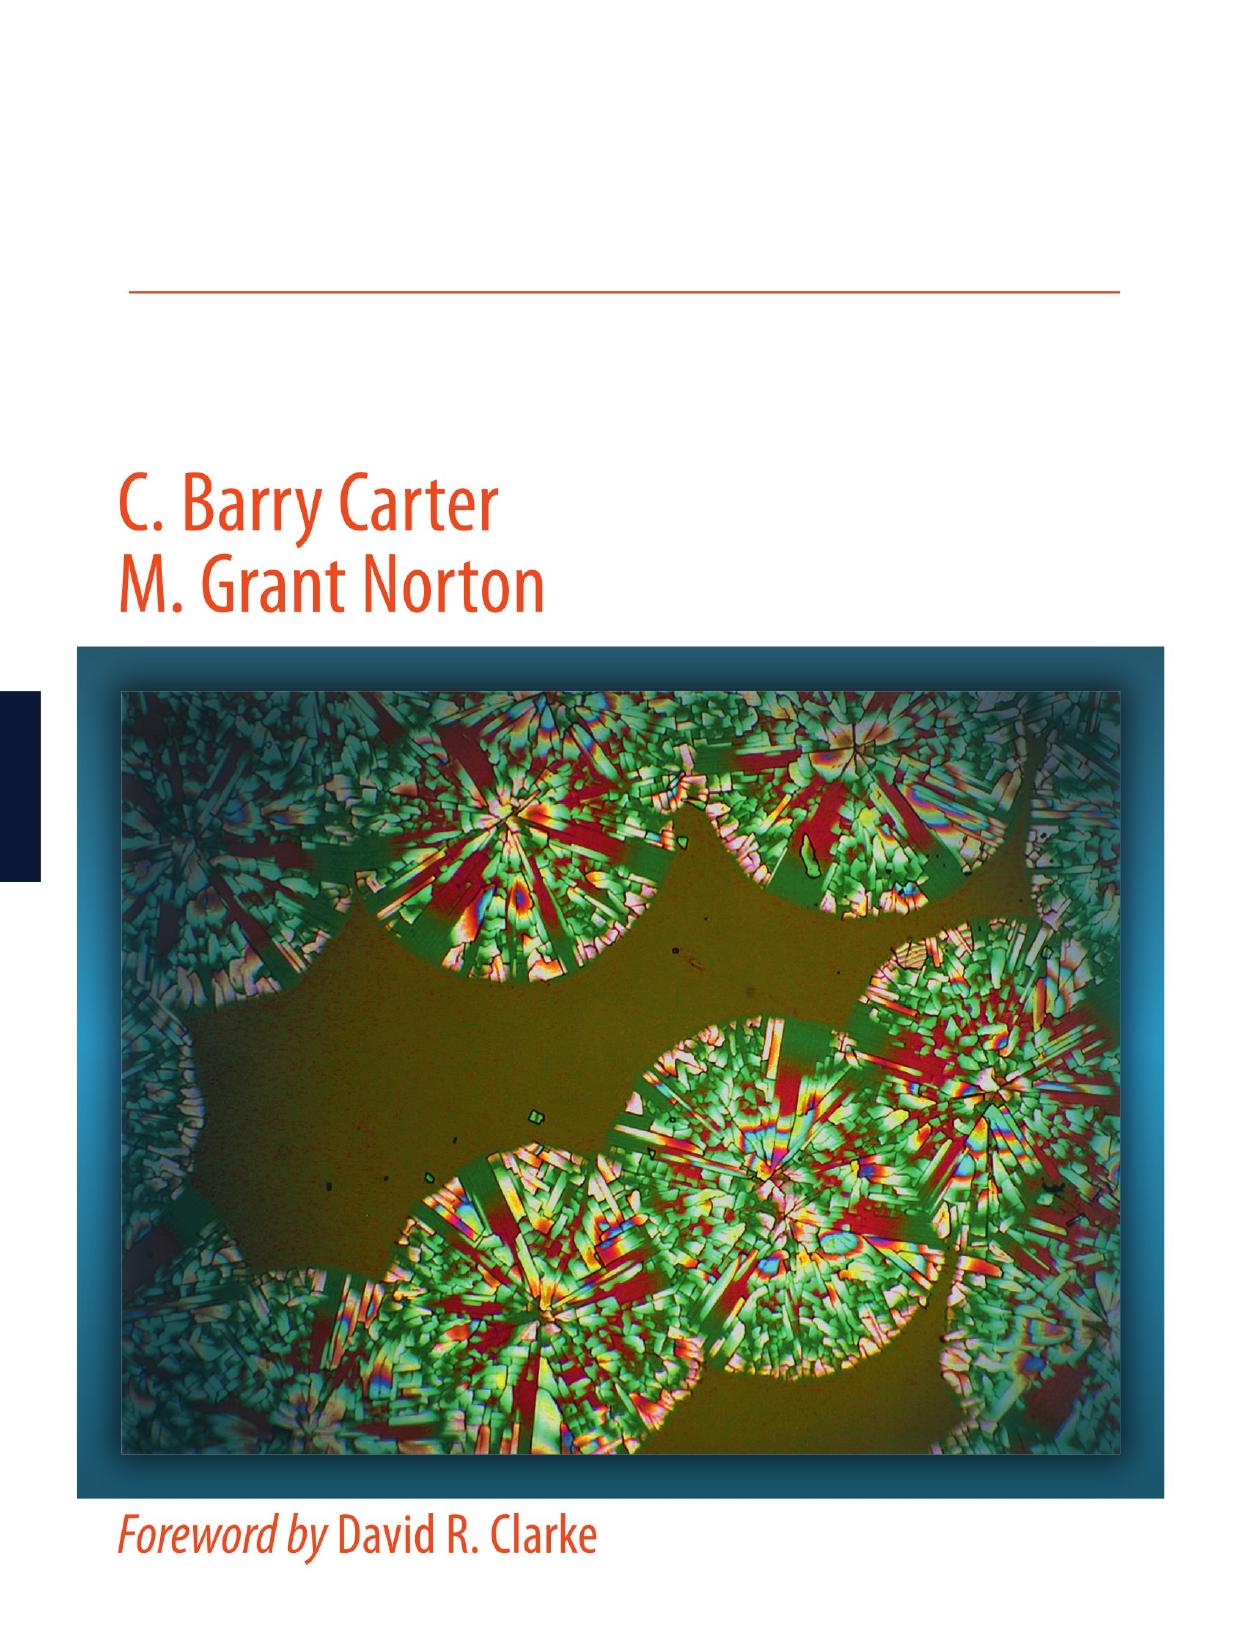 Ceramic Materials by C. Barry Carter & M. Grant Norton